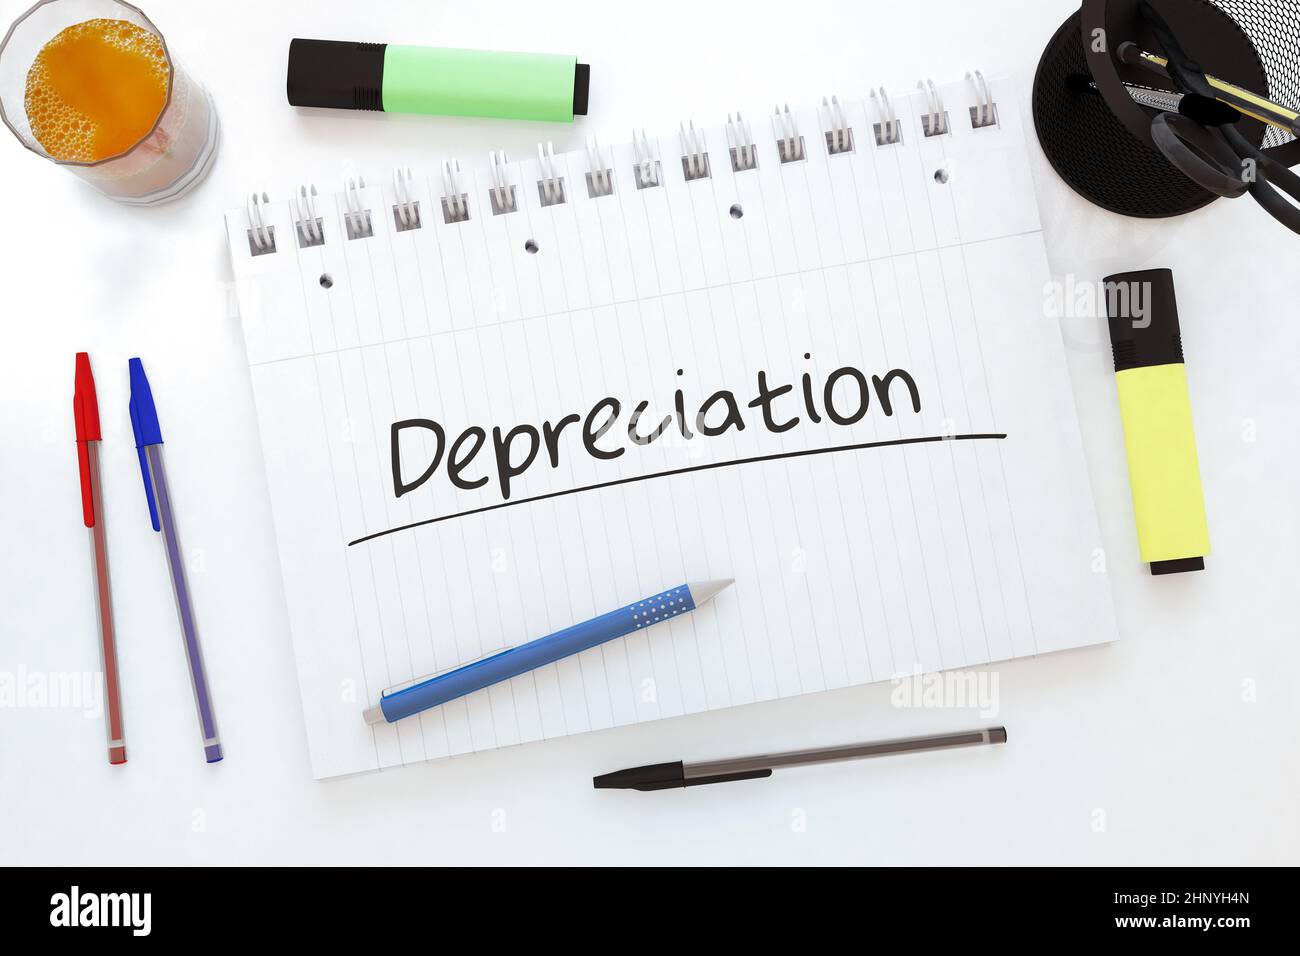 Depreciation - handwritten text in a notebook on a desk - 3d render illustration. Stock Photo